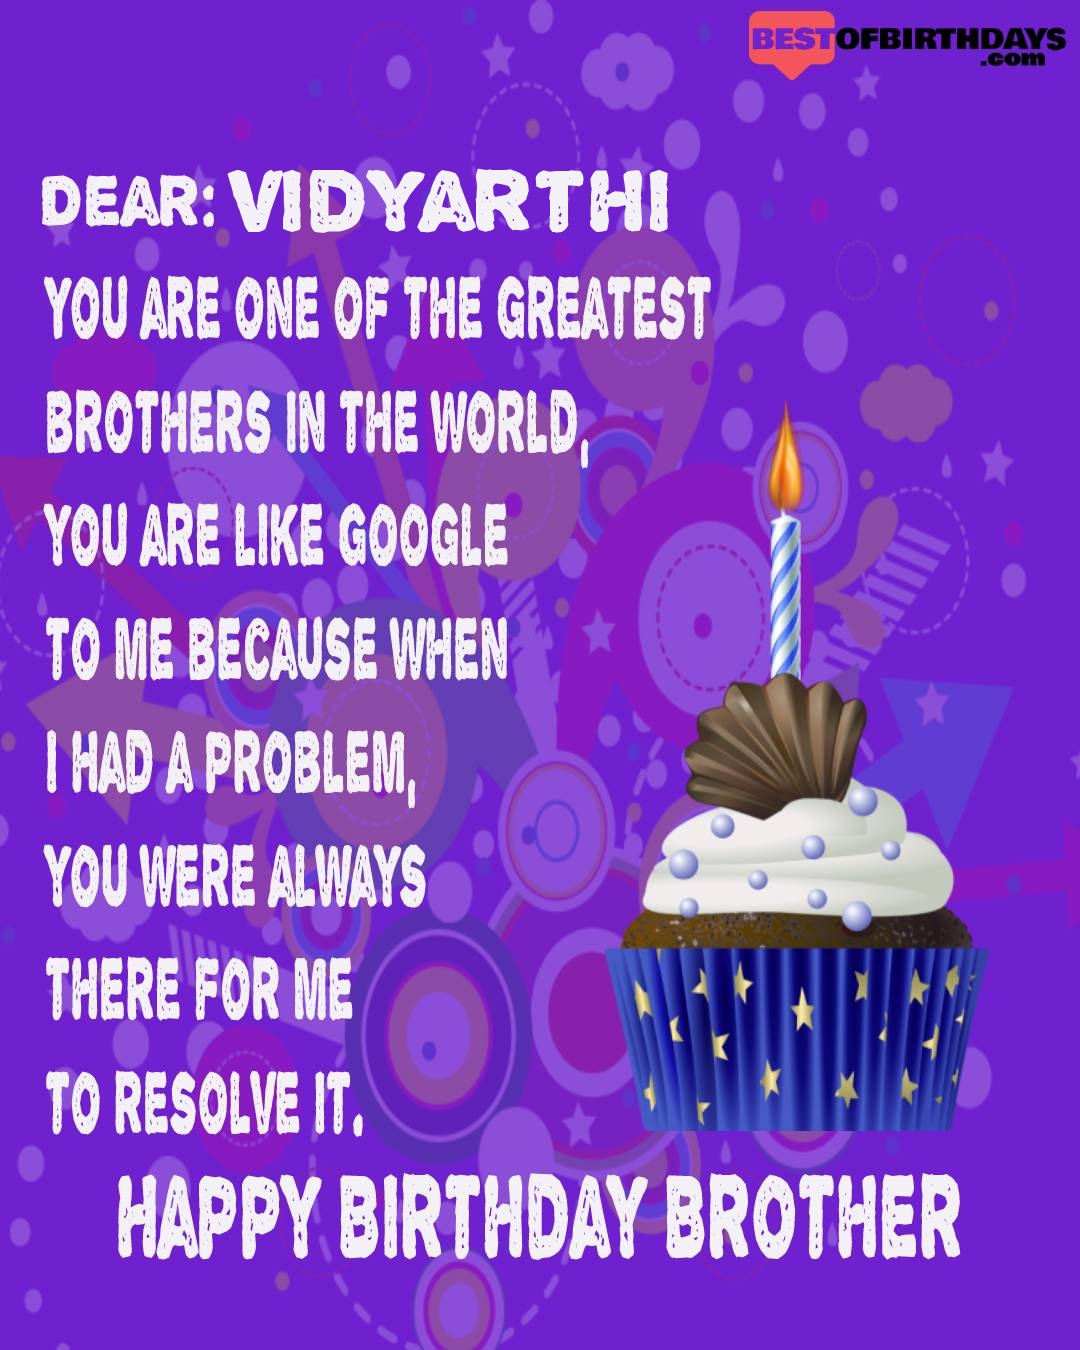 Happy birthday vidyarthi bhai brother bro